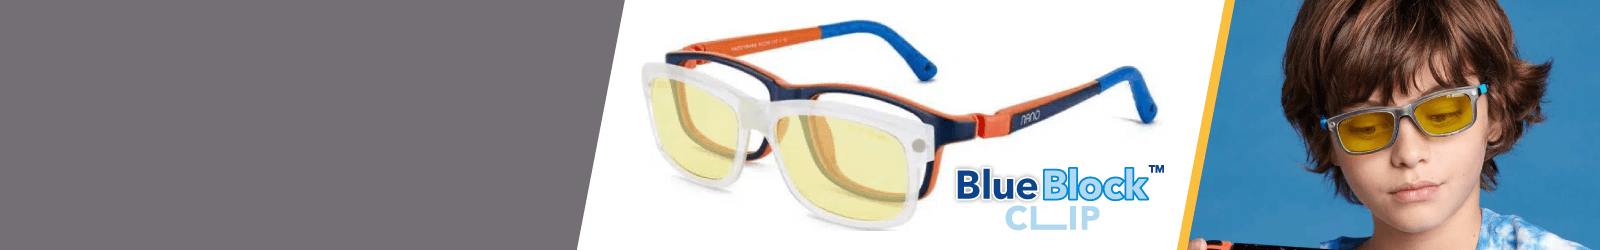 Nano Blue Block Clip Eyewear for Kids   for Girls